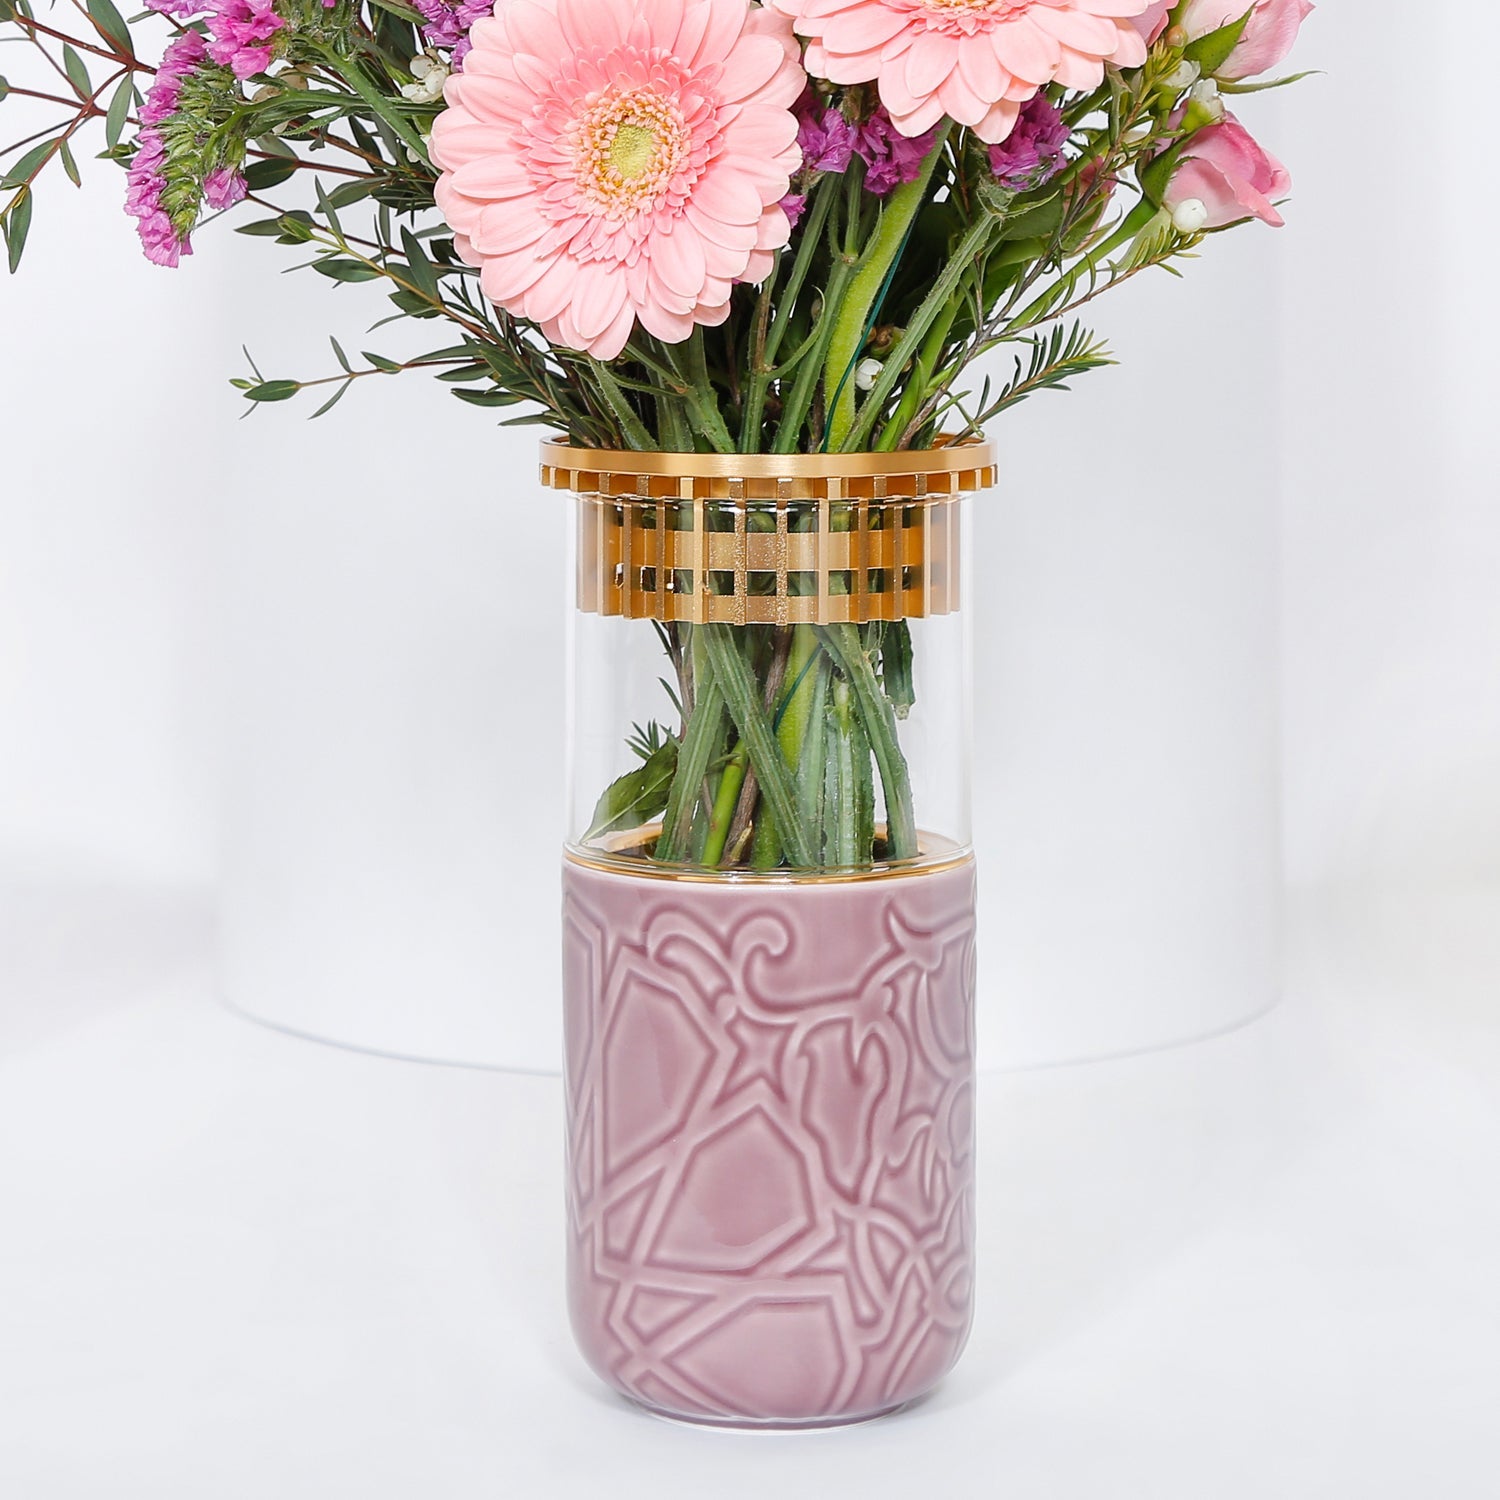 Pink Flowers Vase Arrangement